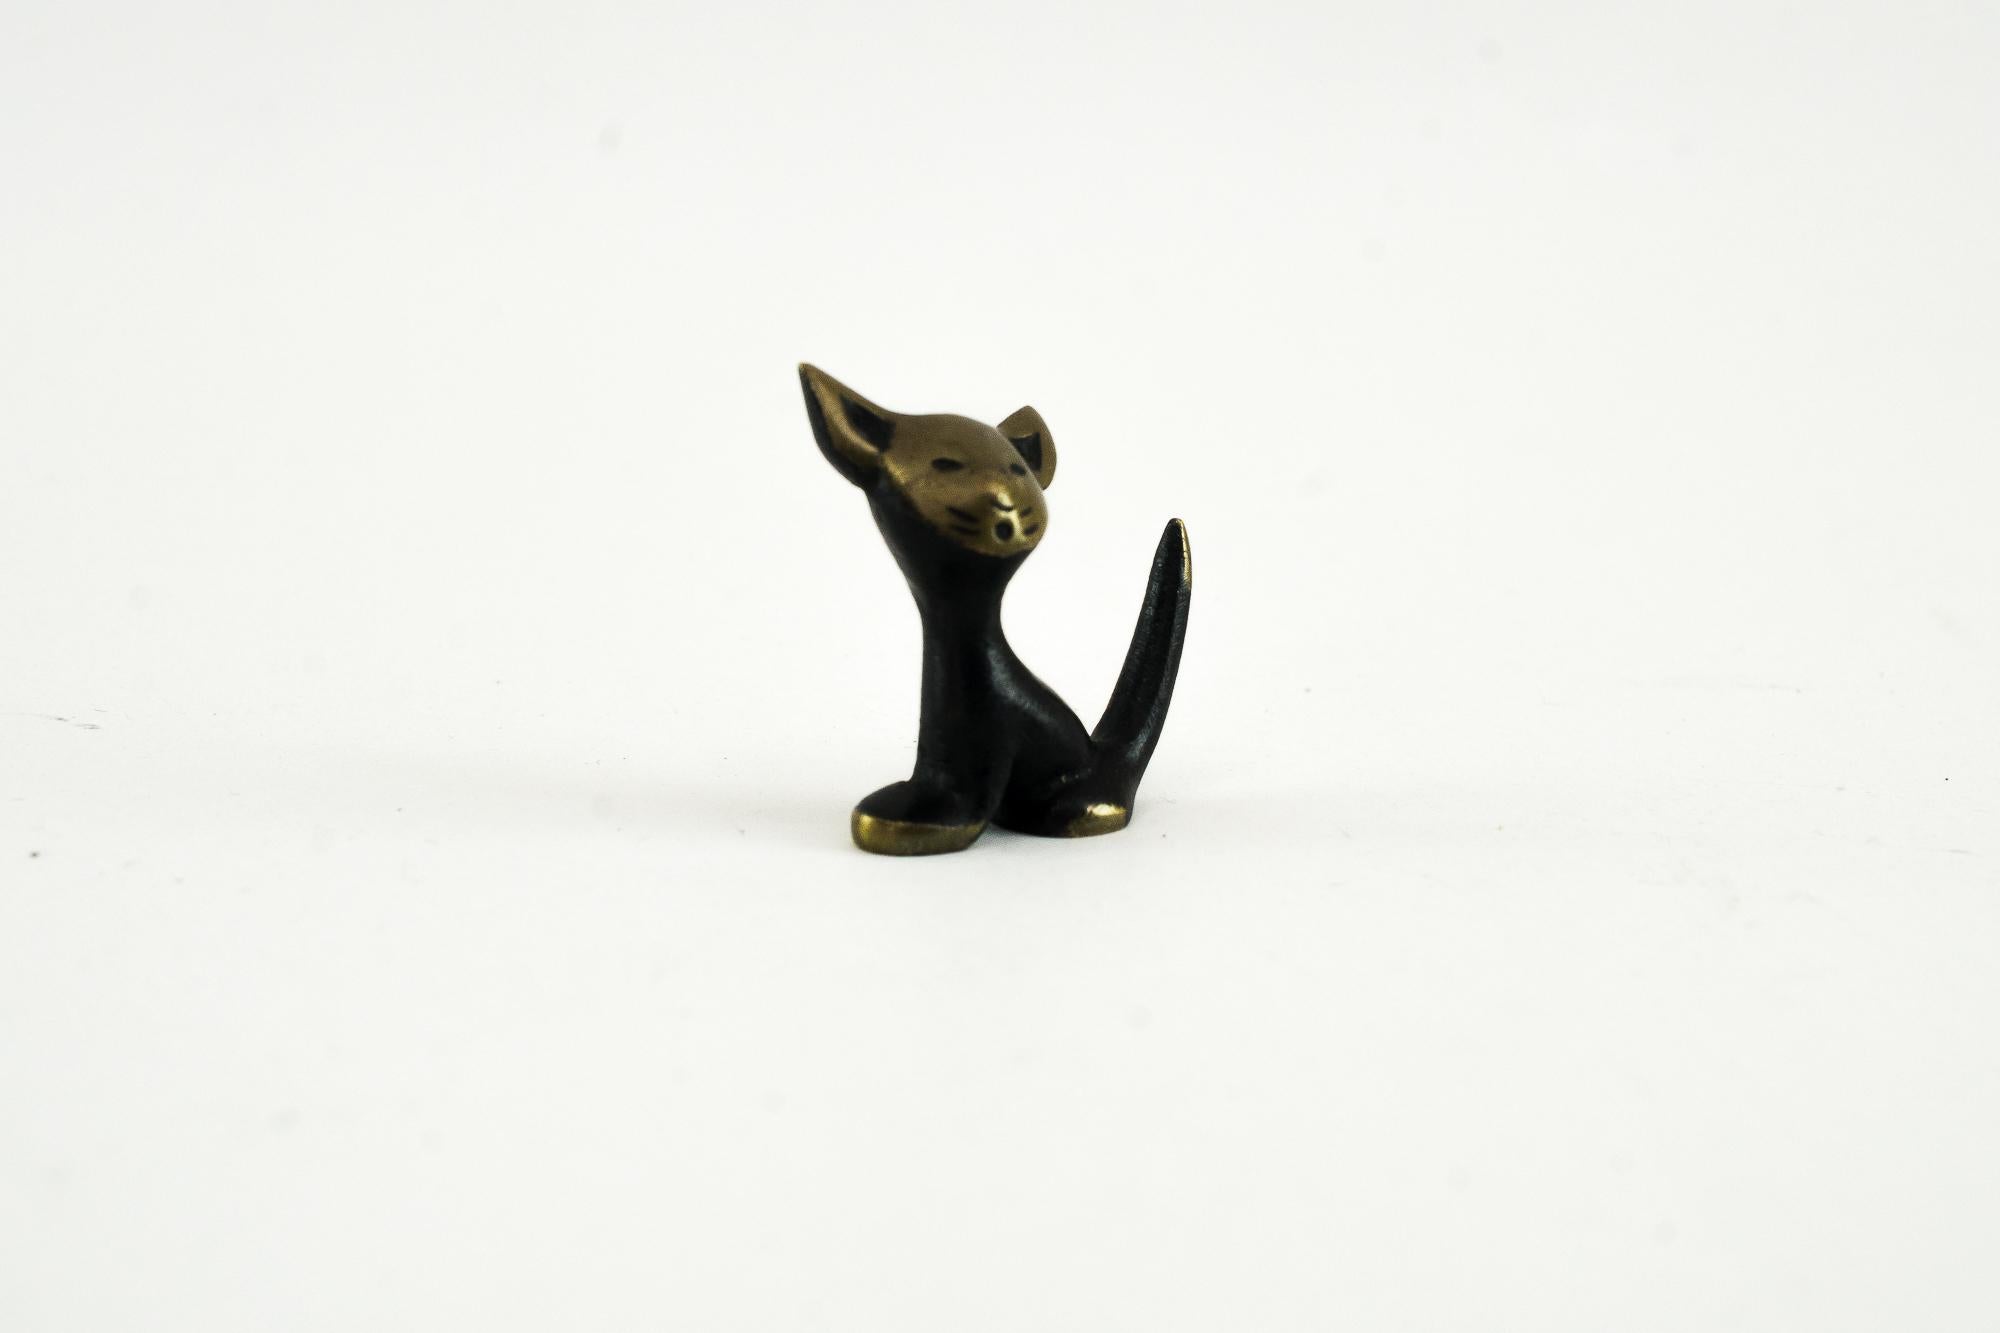 Cat figurine by Walter Bosse
Original condition.